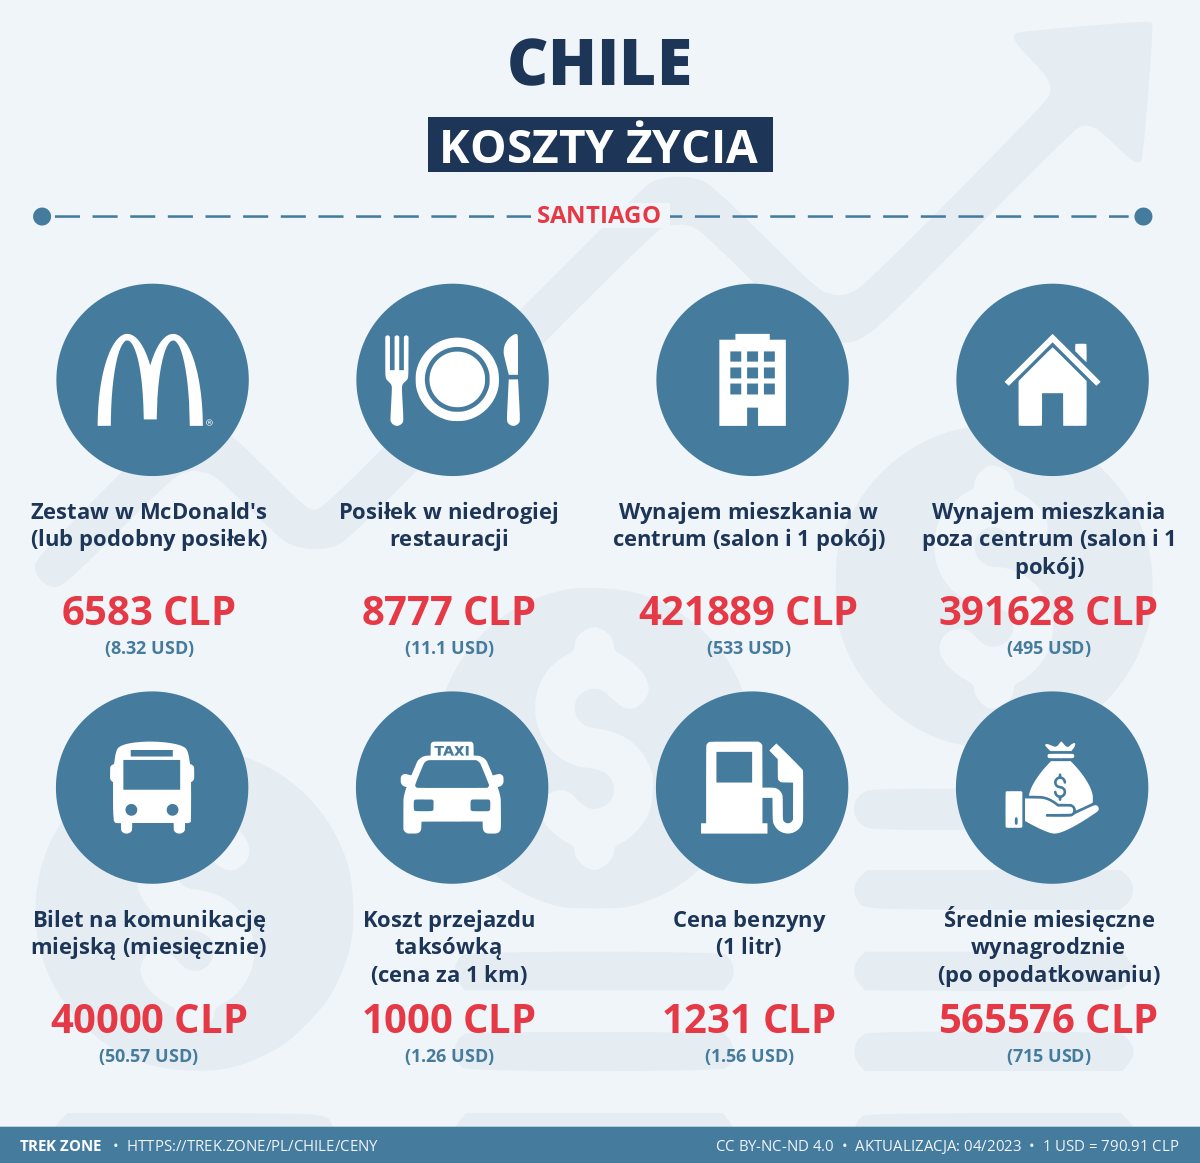 ceny i koszty zycia chile